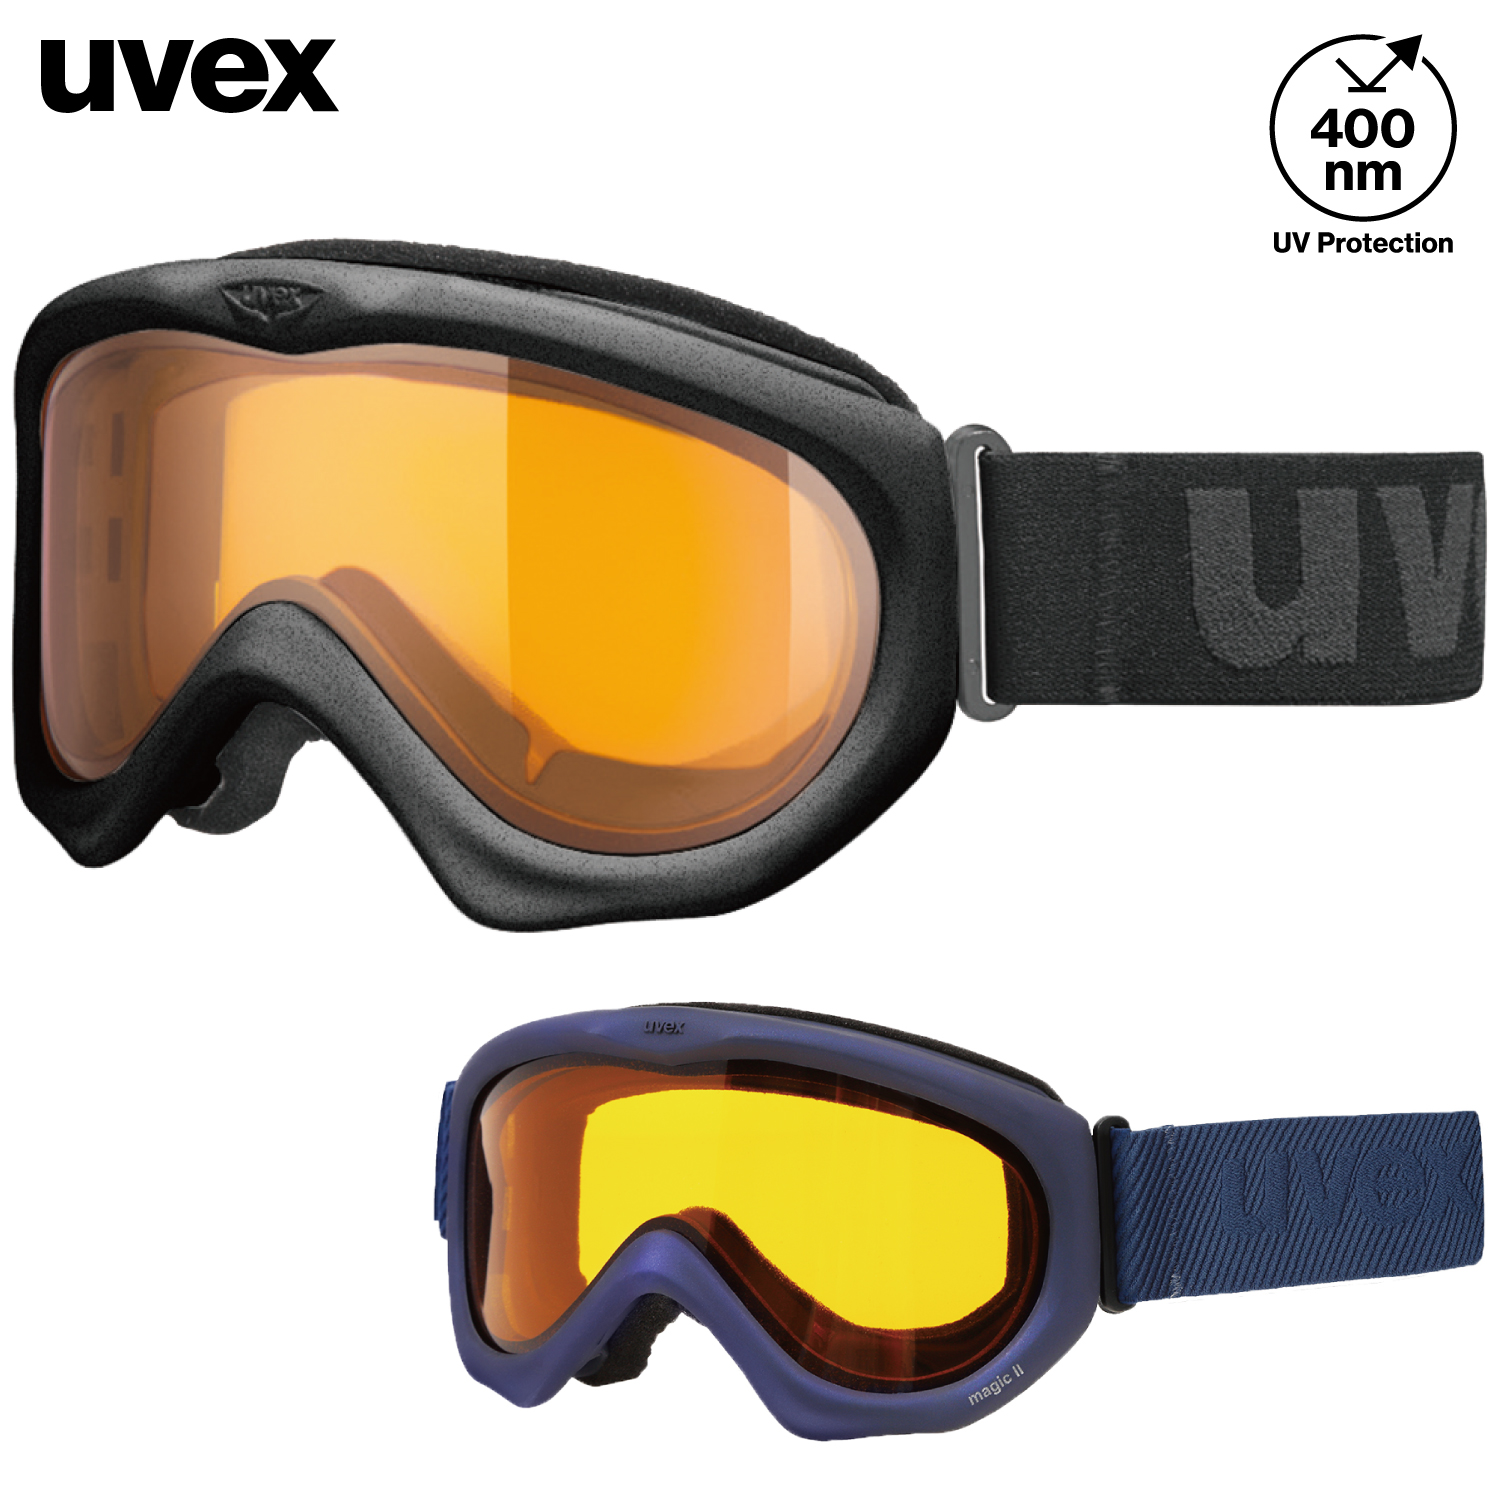 uvex ウベックス スキー スノーボード ゴーグル ユニセックス 大人